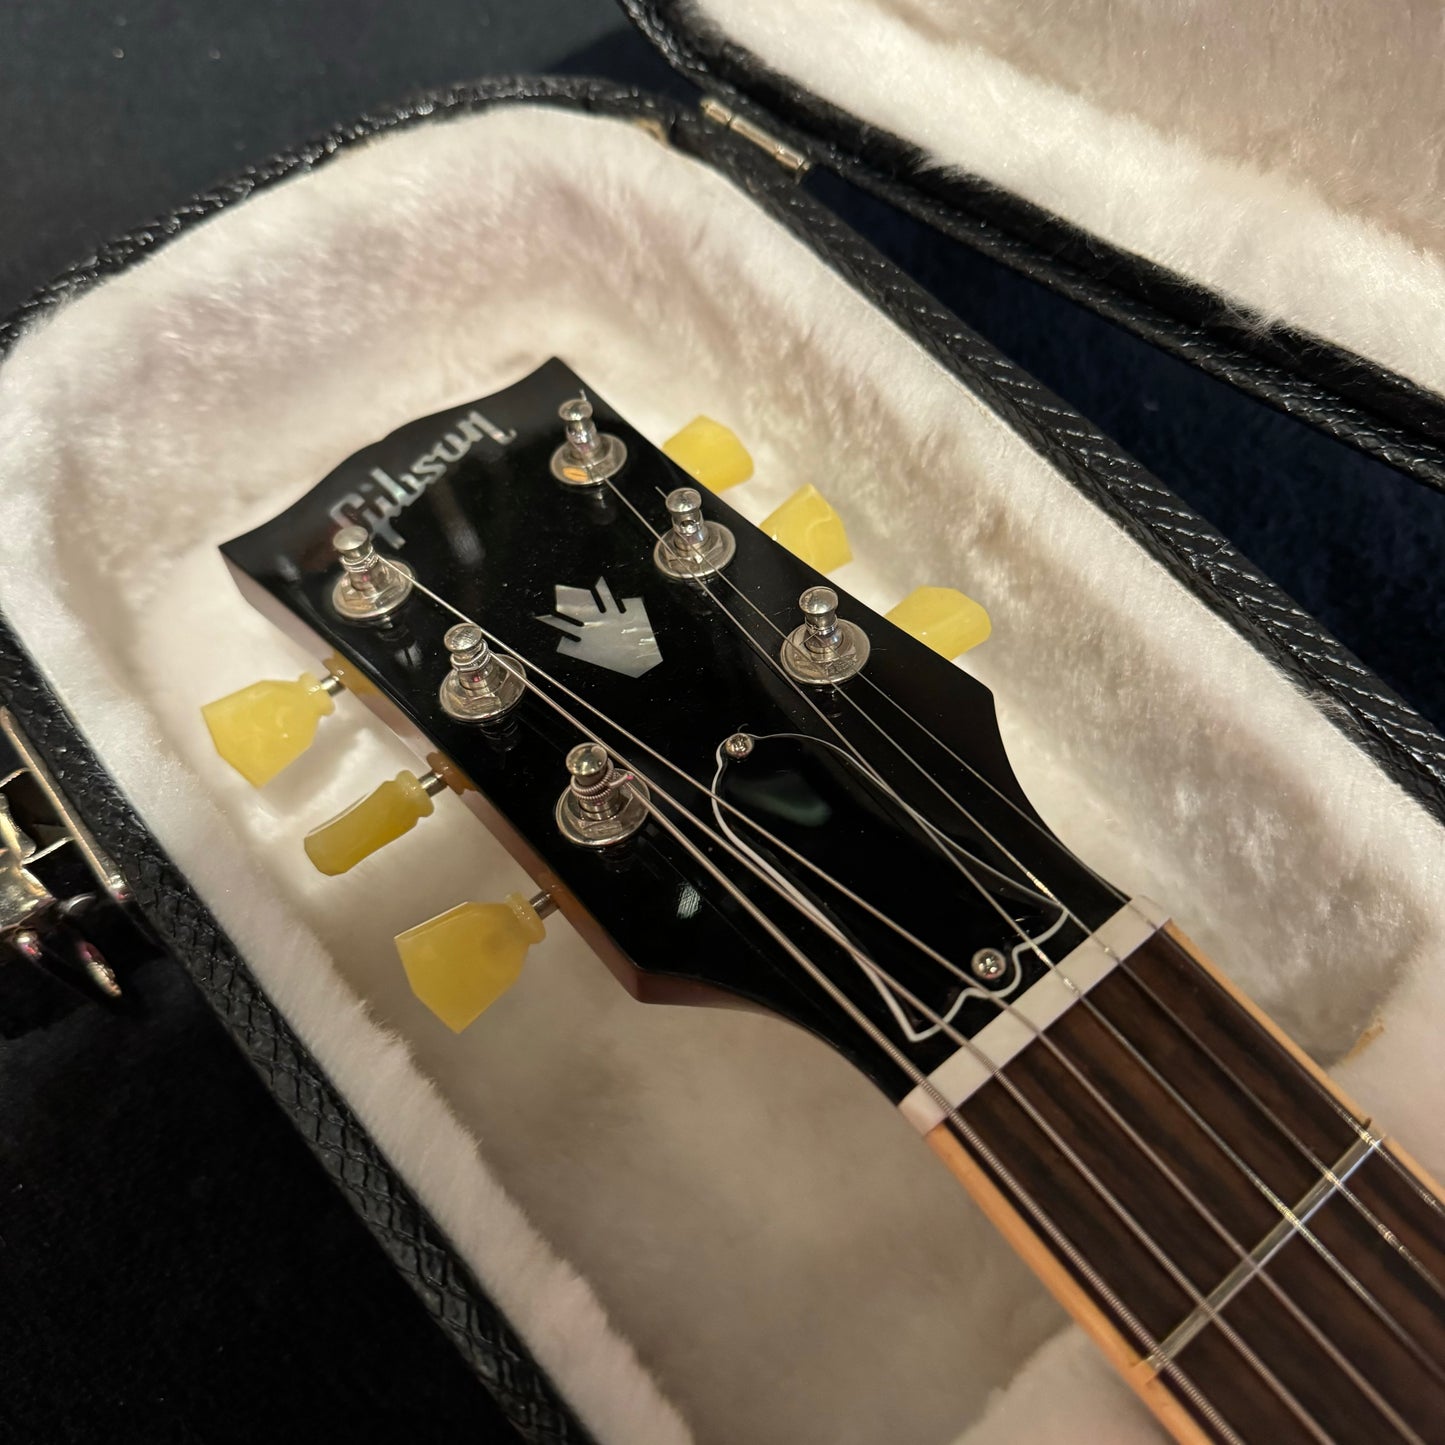 Gibson SG 61’ Standard Cherry Red